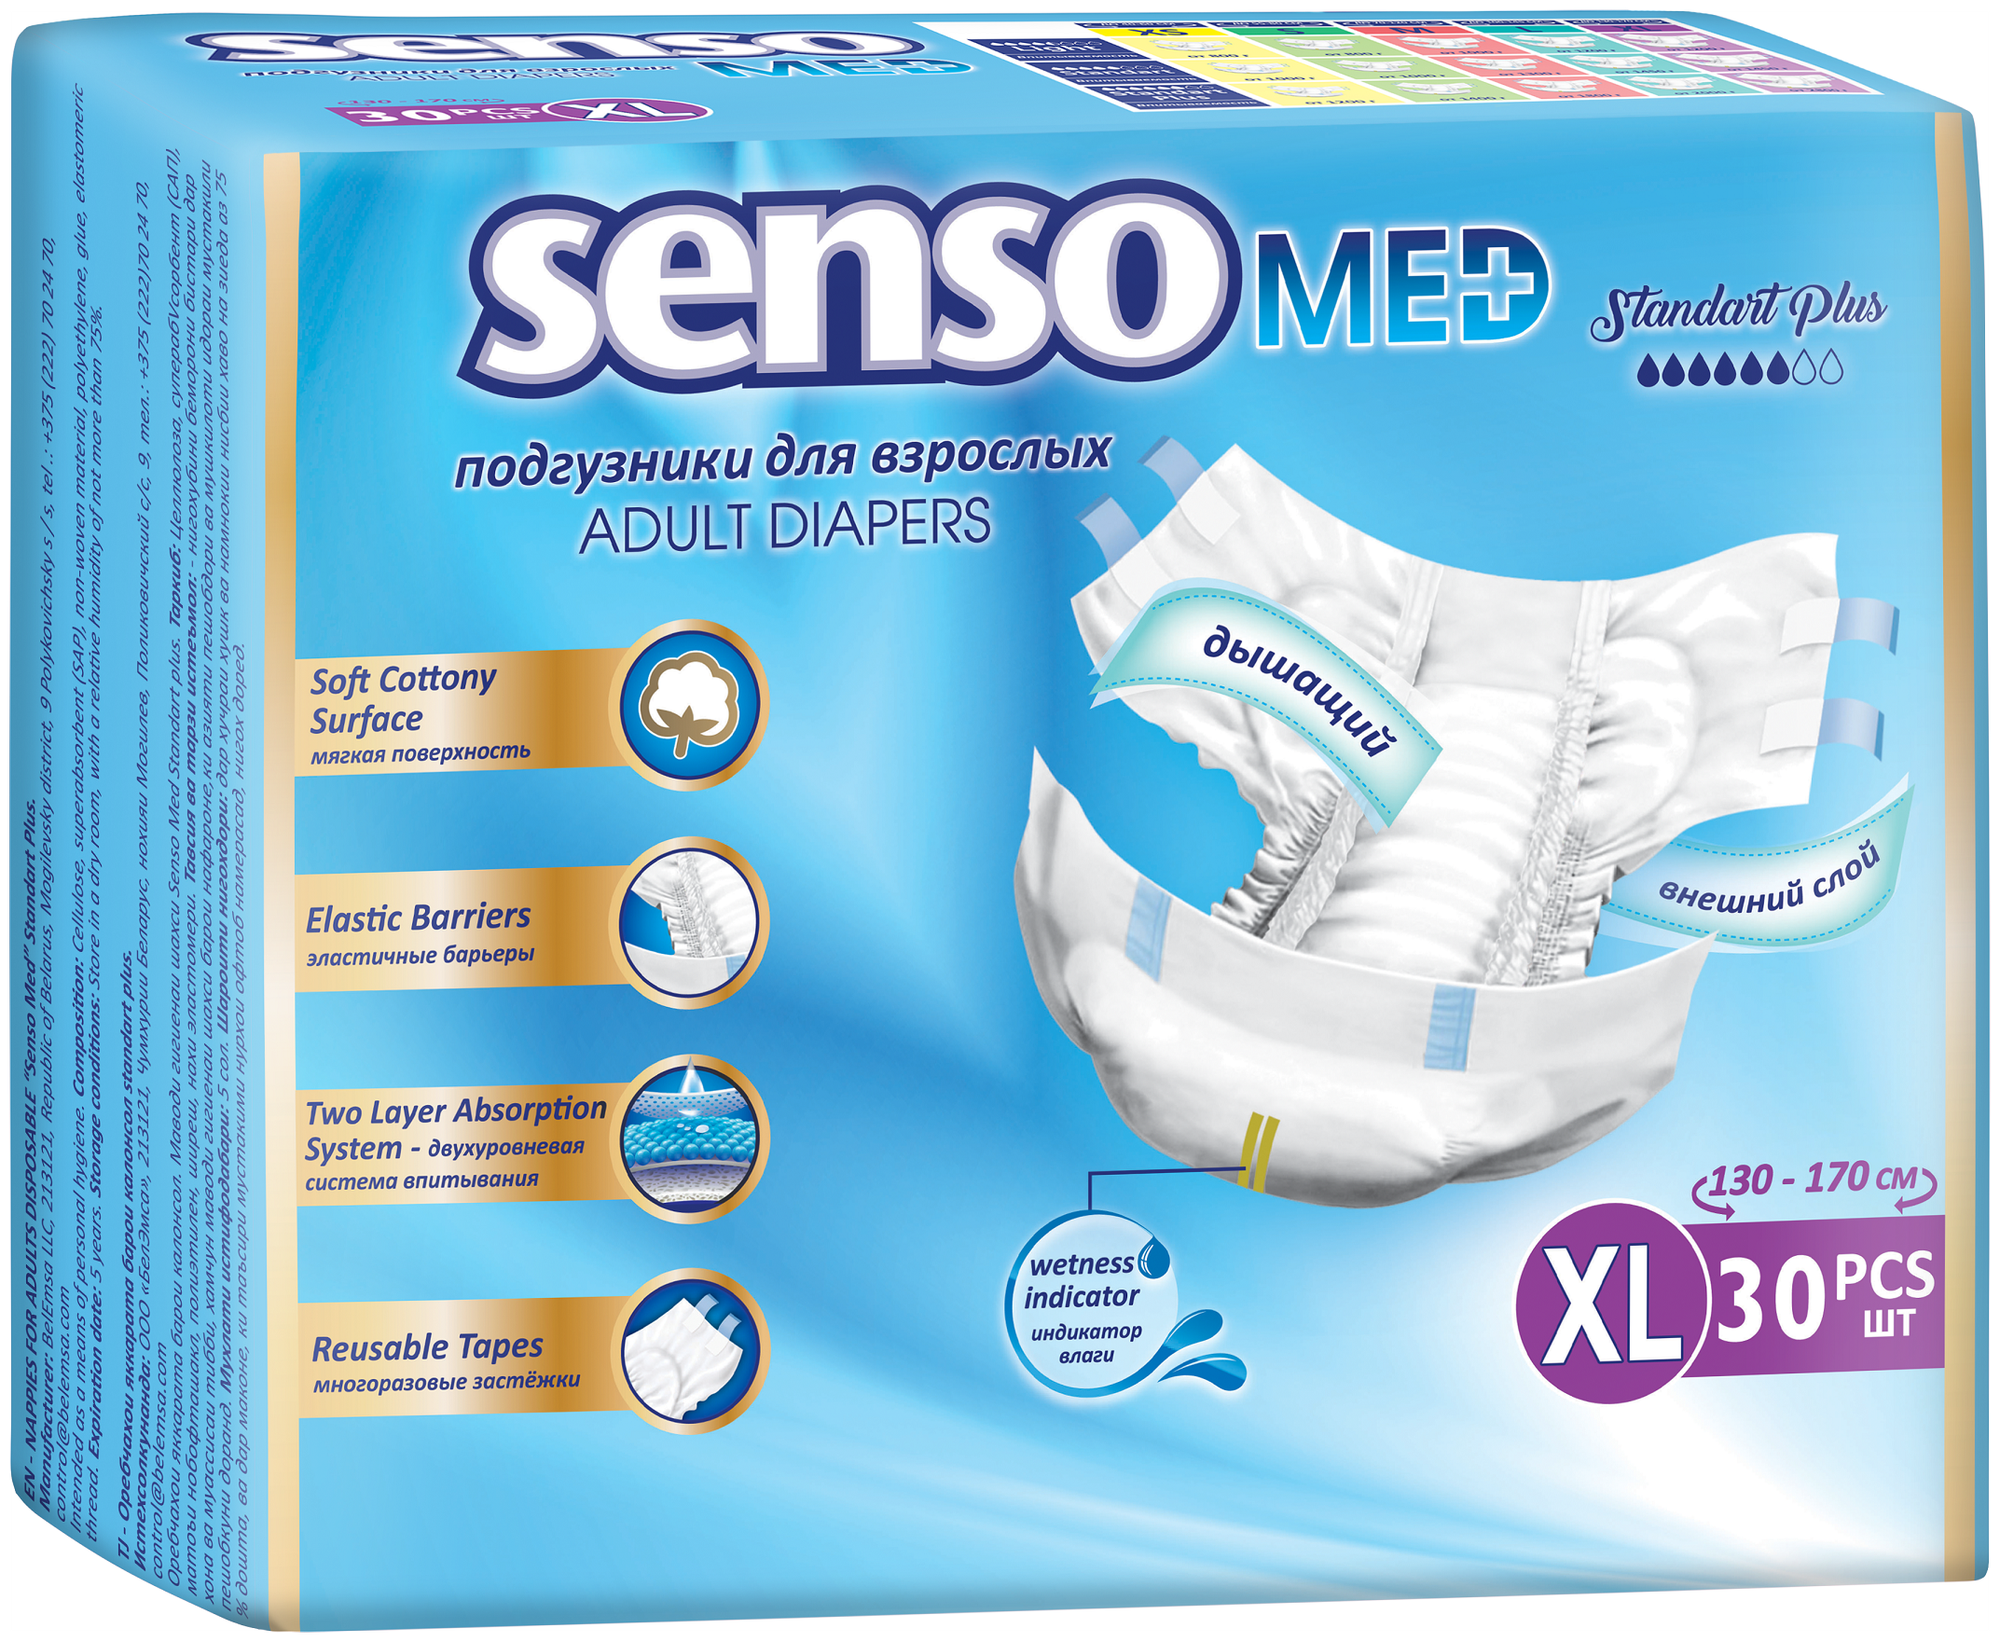 Senso Med Standard Plus 30